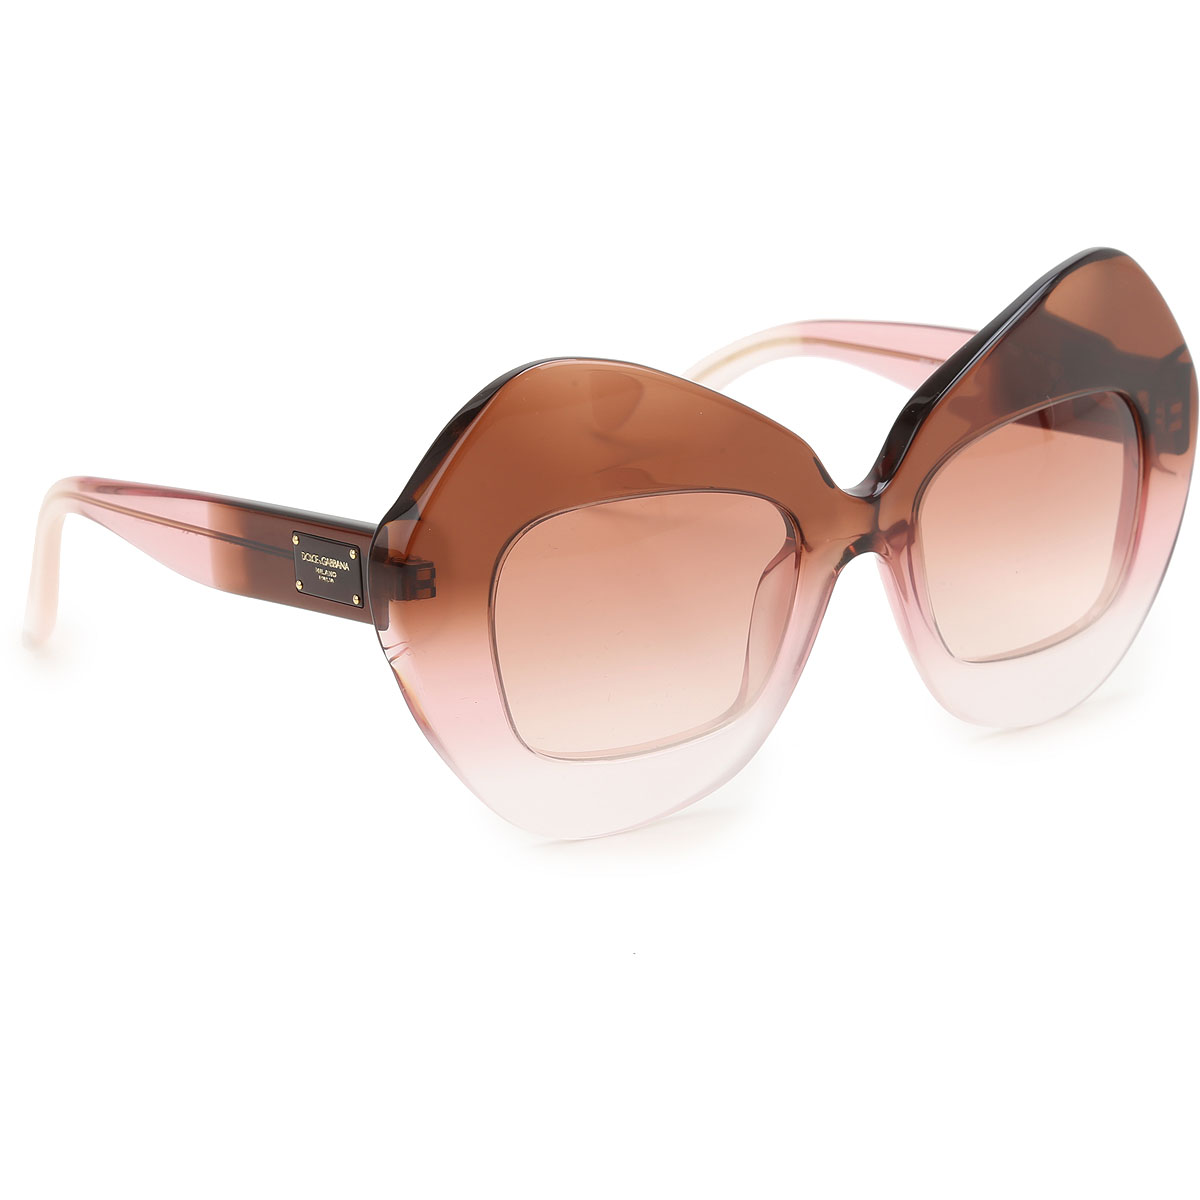 Sunglasses Dolce & Gabbana, Style code: dg4290-3060-13